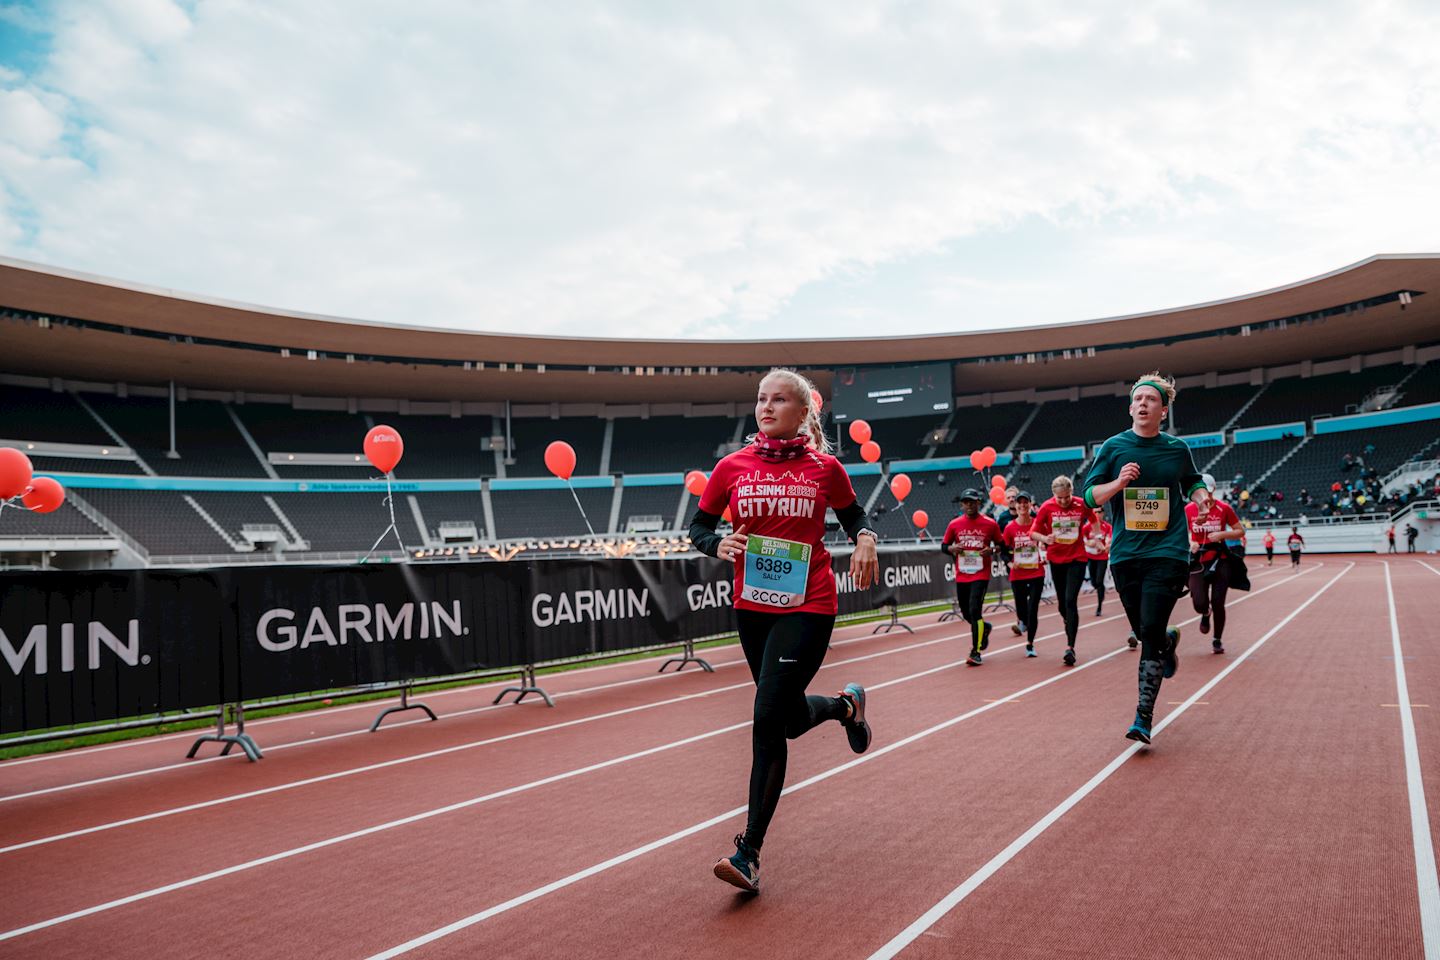 Helsinki City Running Day May 14 2022 World S Marathons